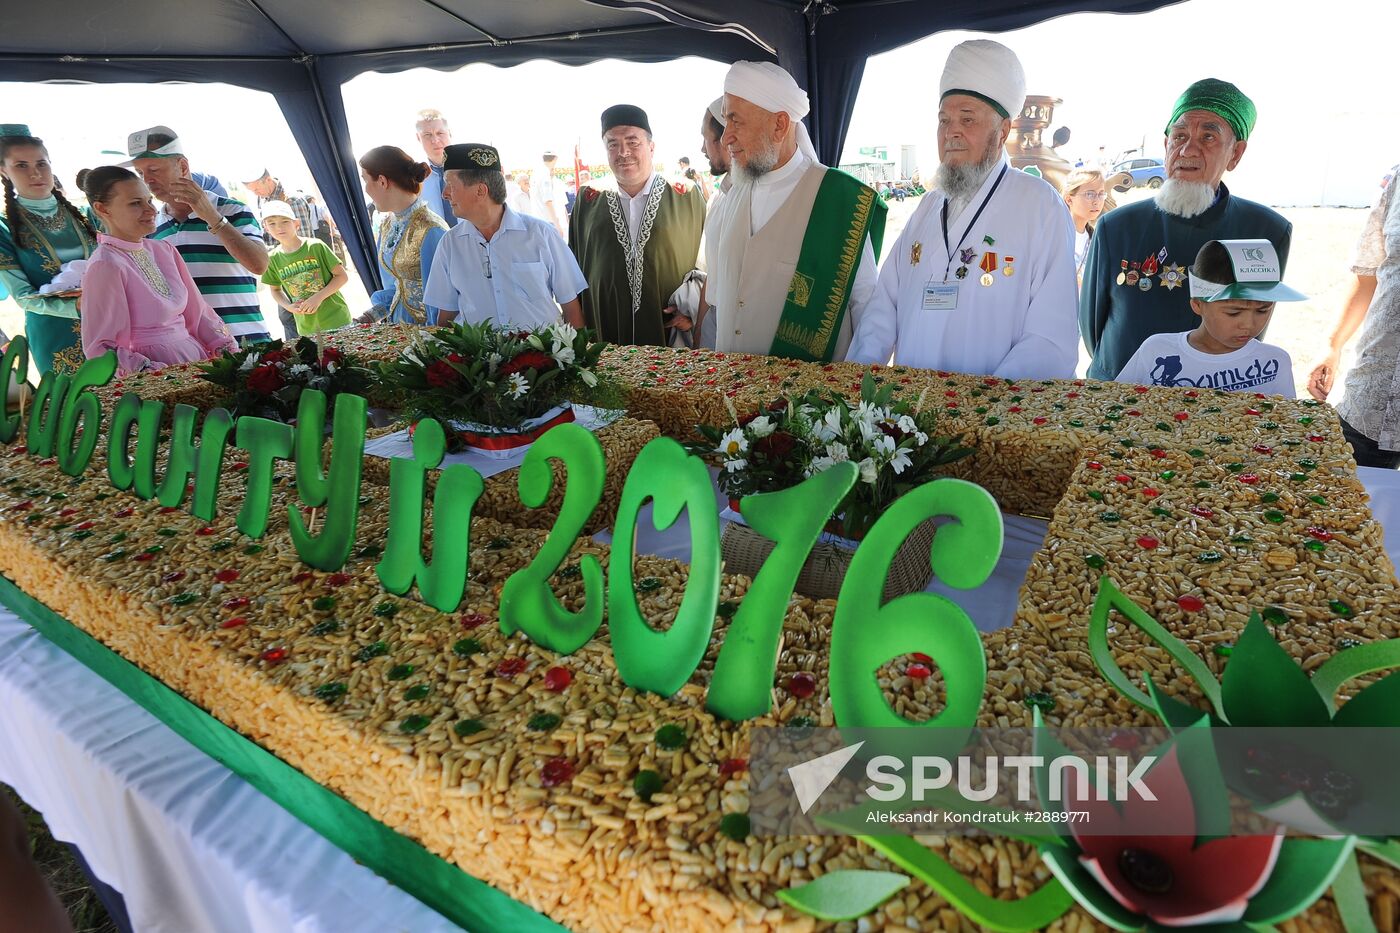 Sabantuy festival celebrated in Chelyabinsk Region